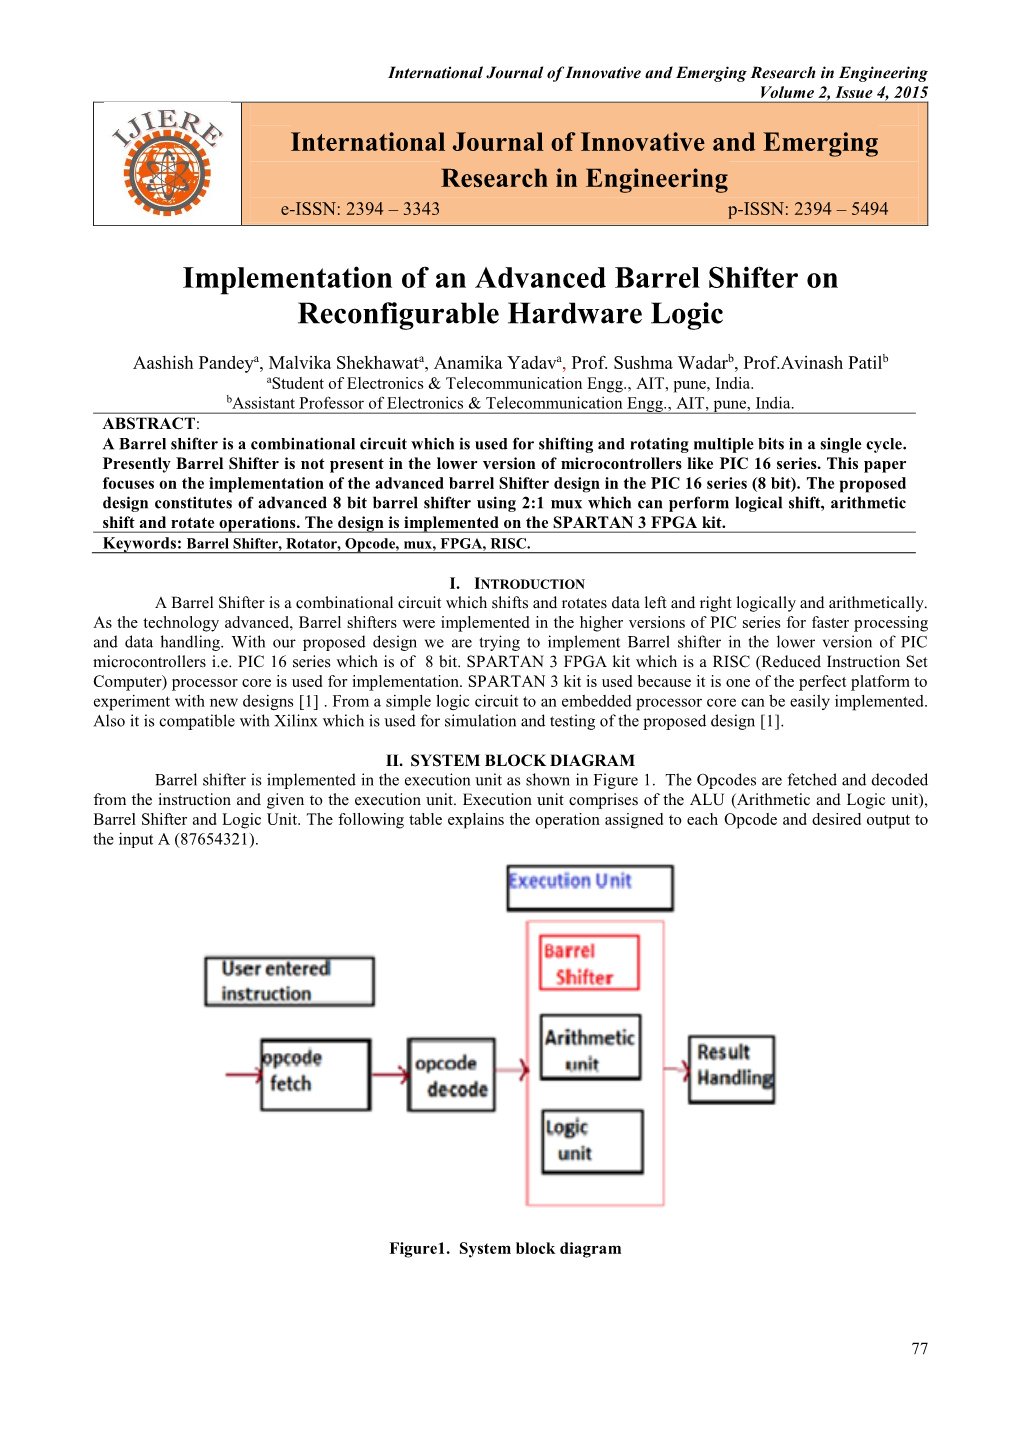 Implementation of an Advanced Barrel Shifter on Reconfigurable Hardware Logic